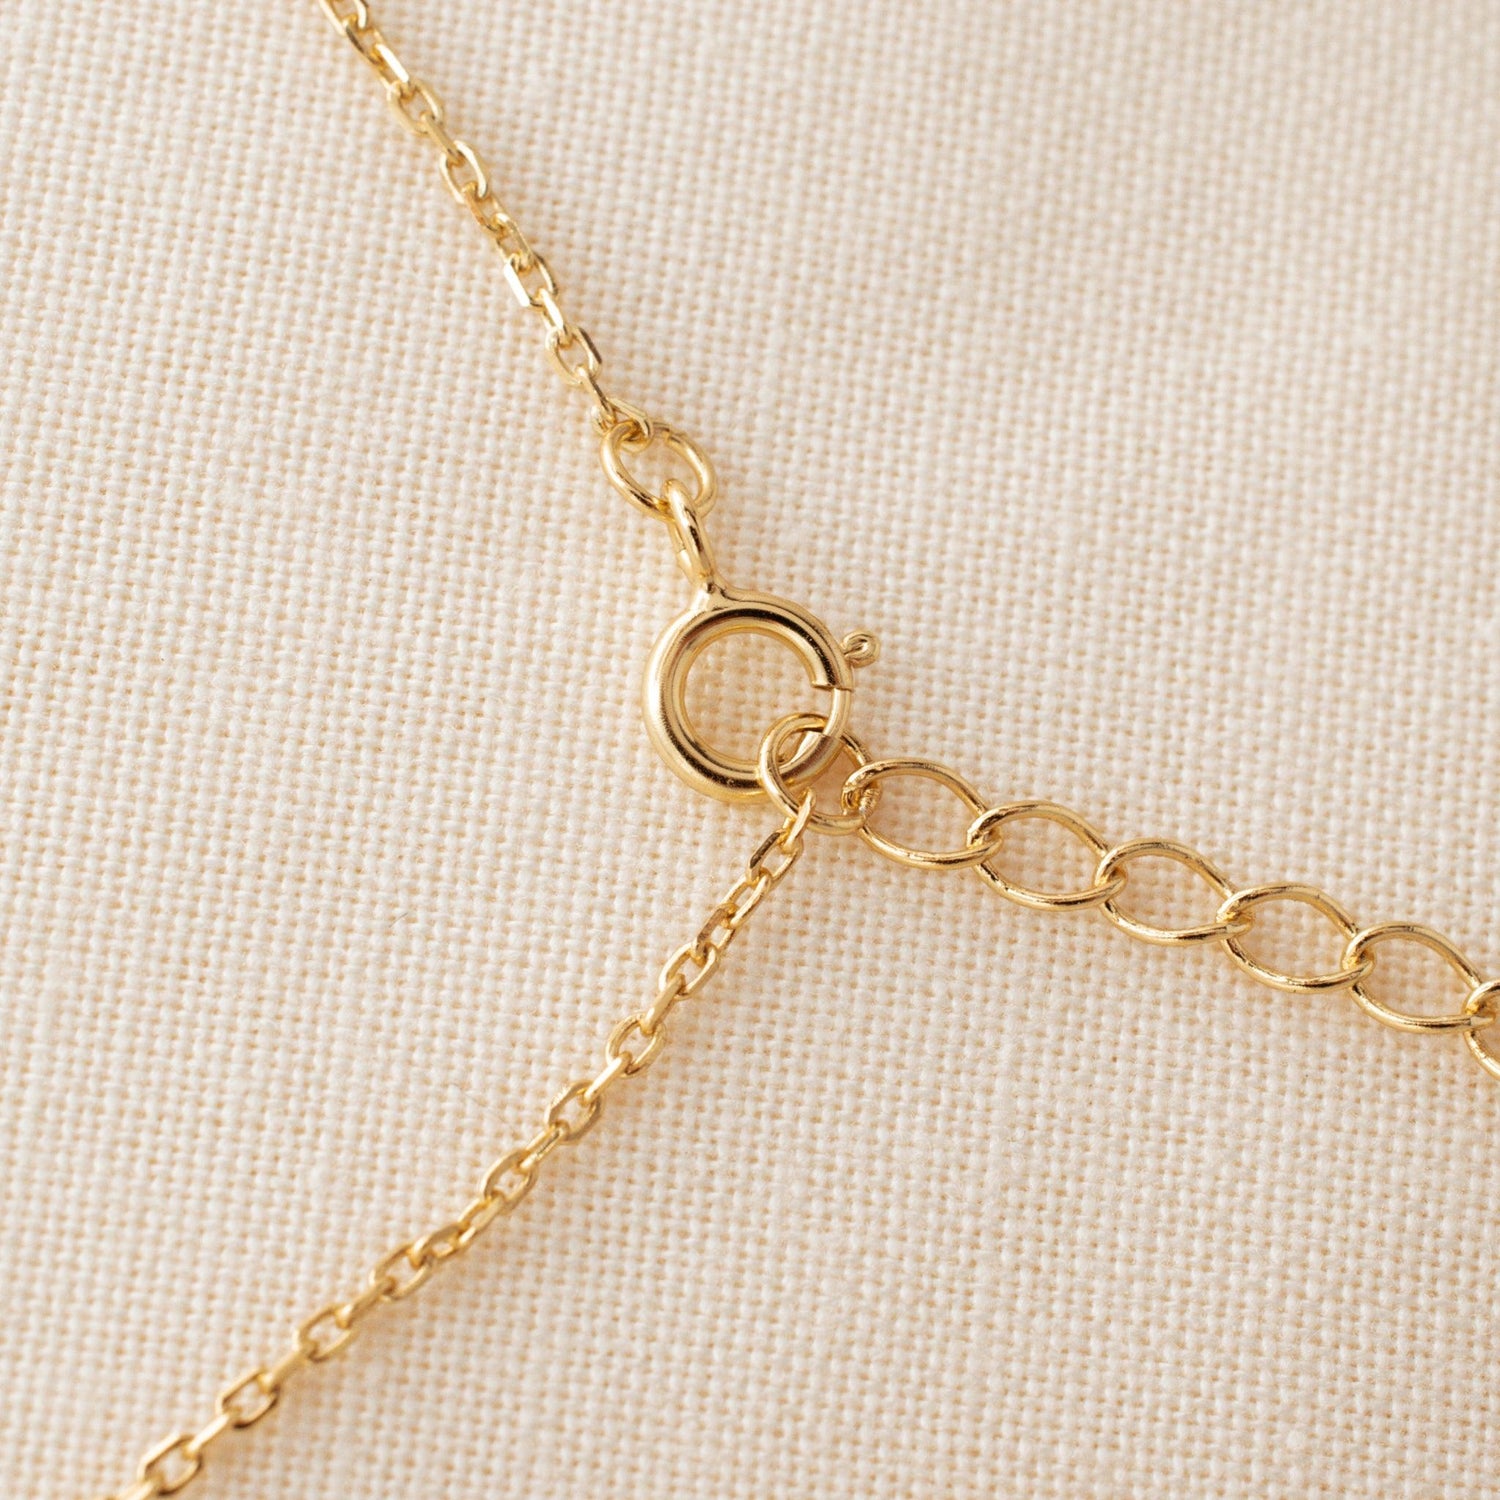 love pendant necklace closing detail